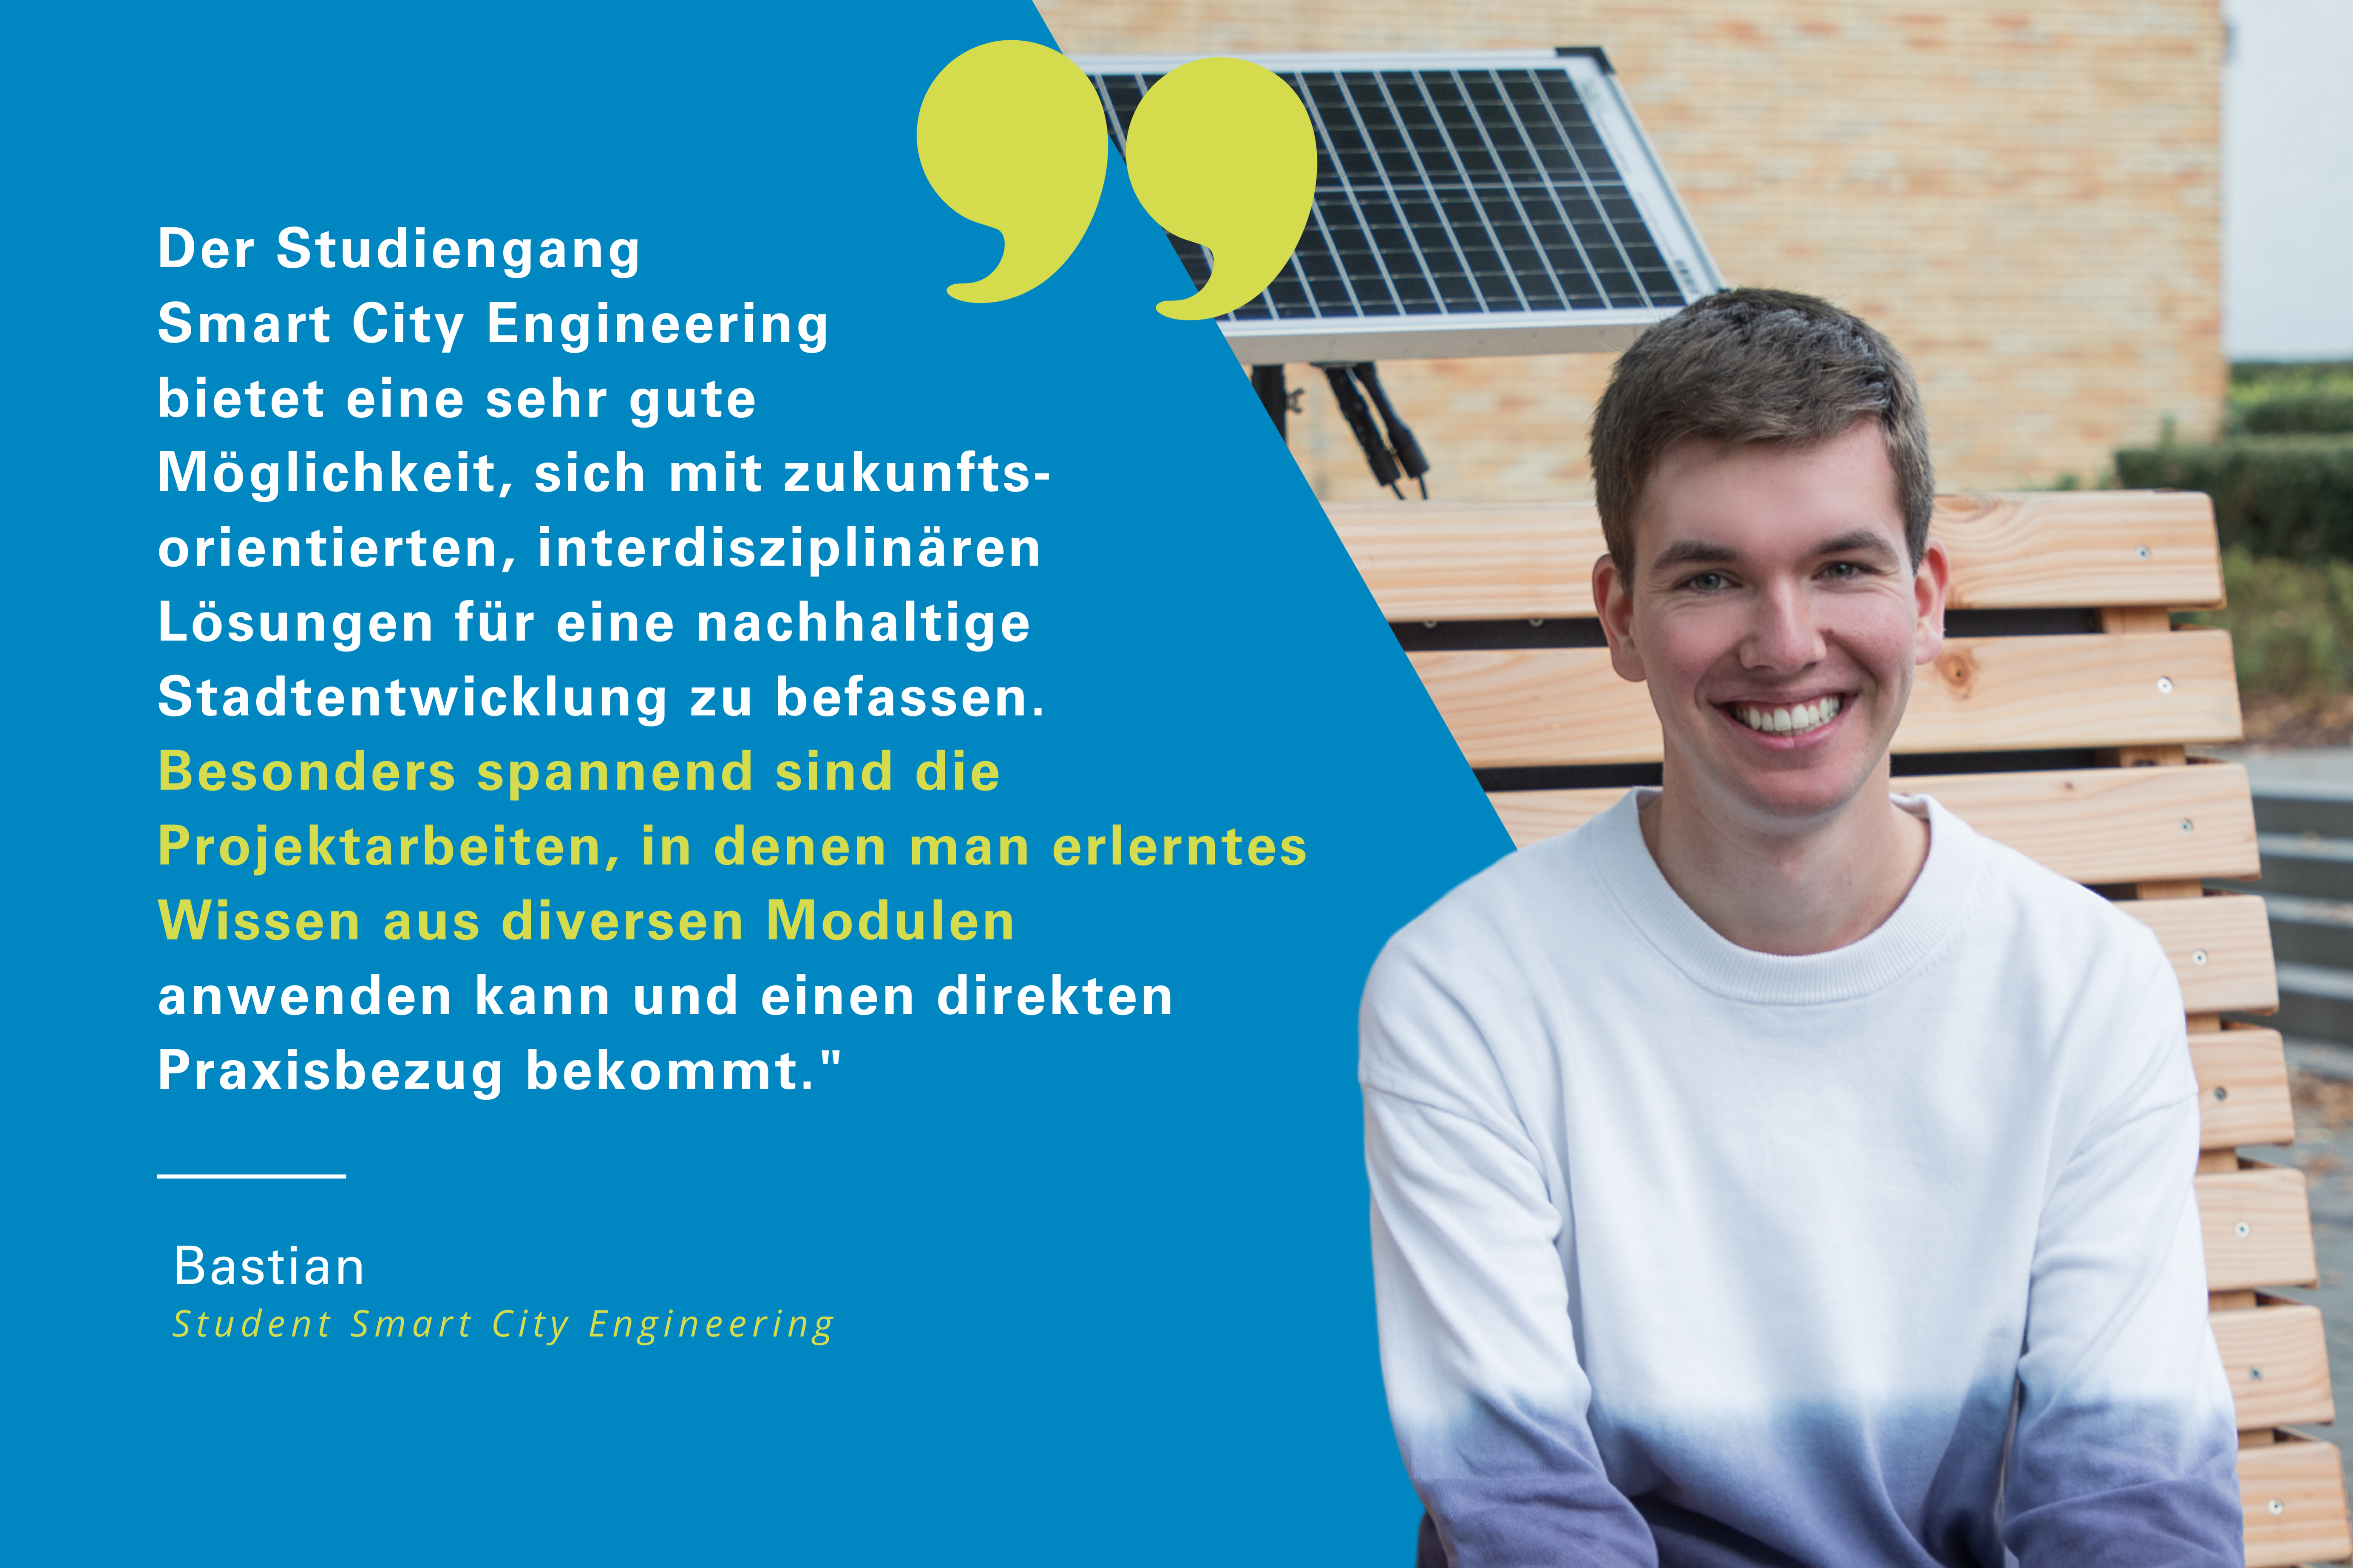 Bastian studiert Smart City Engineering an der Fakultät Versorgungstechnik